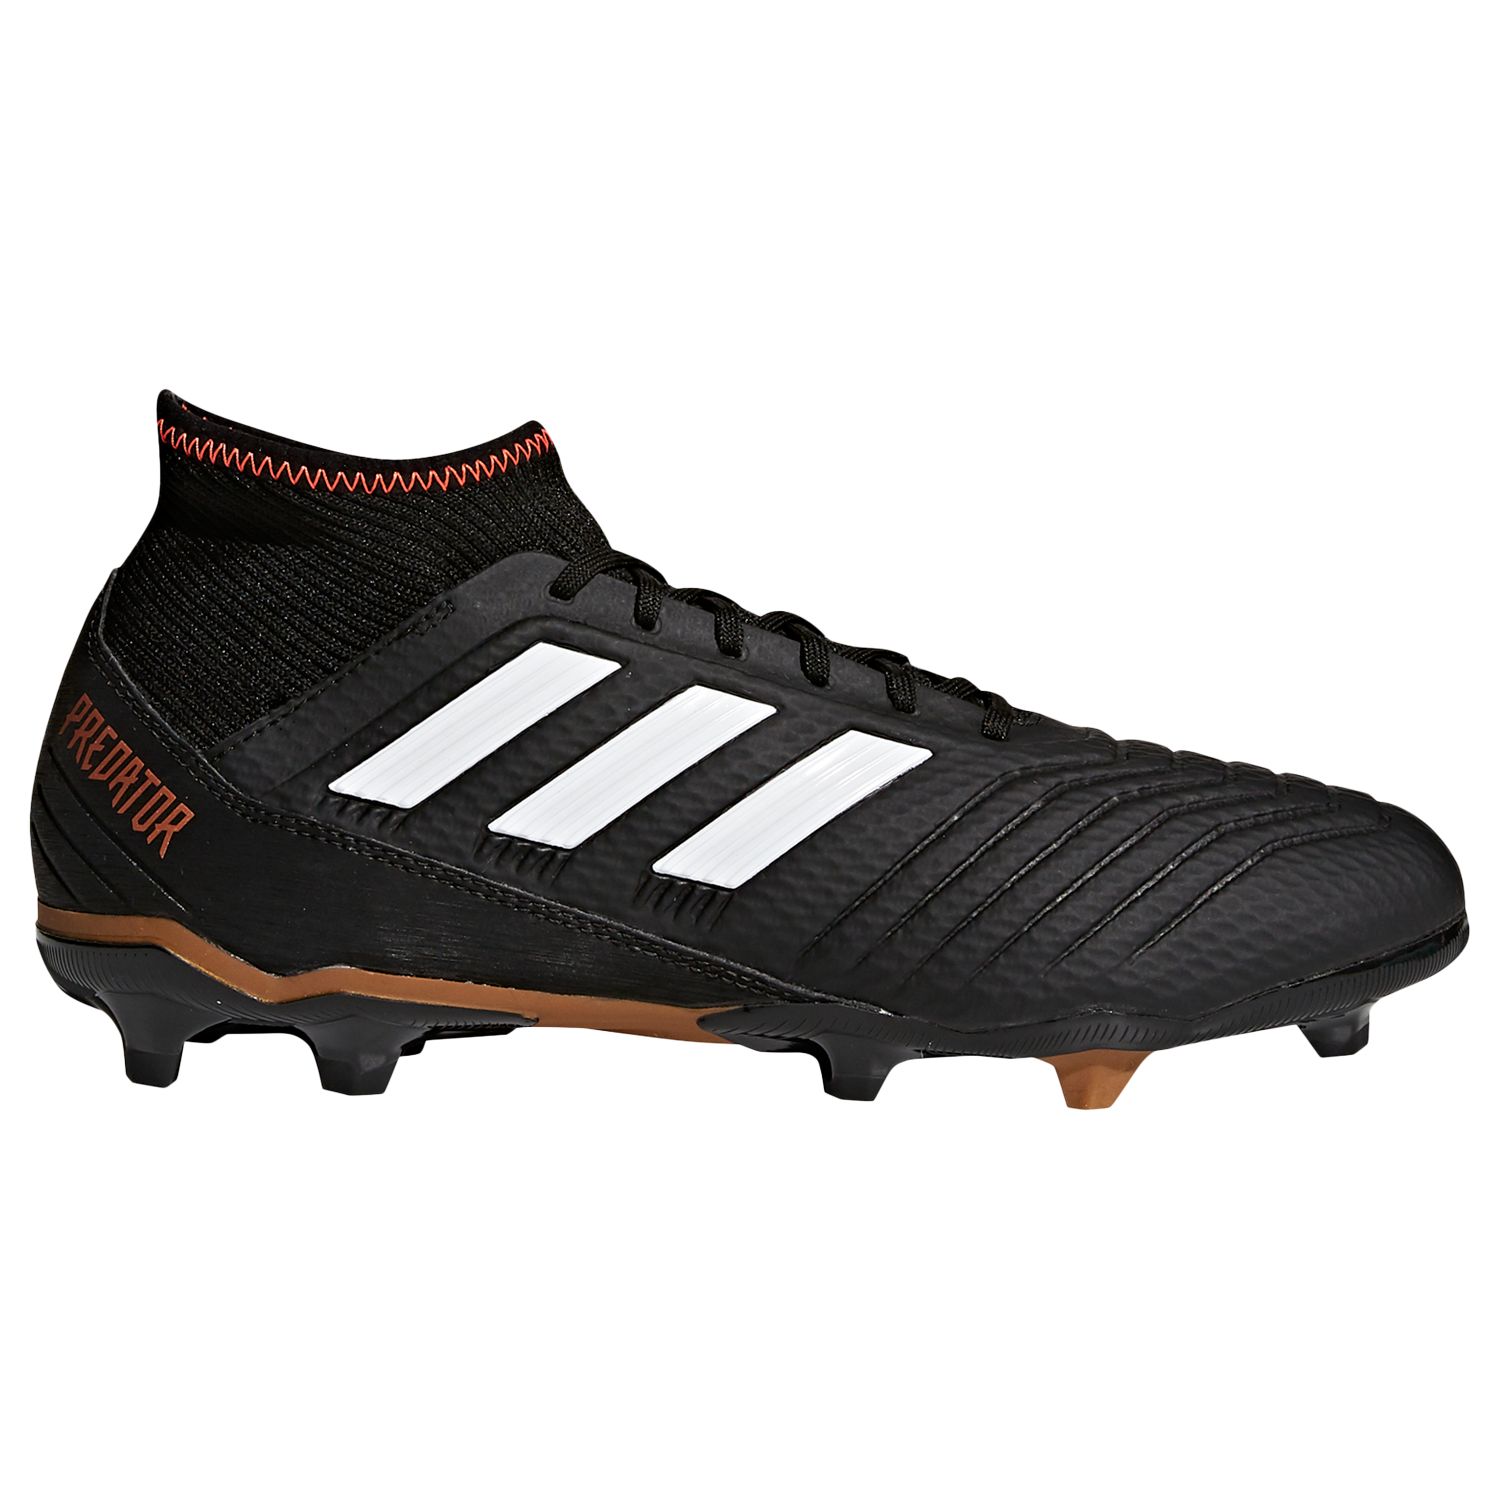 black predator football boots